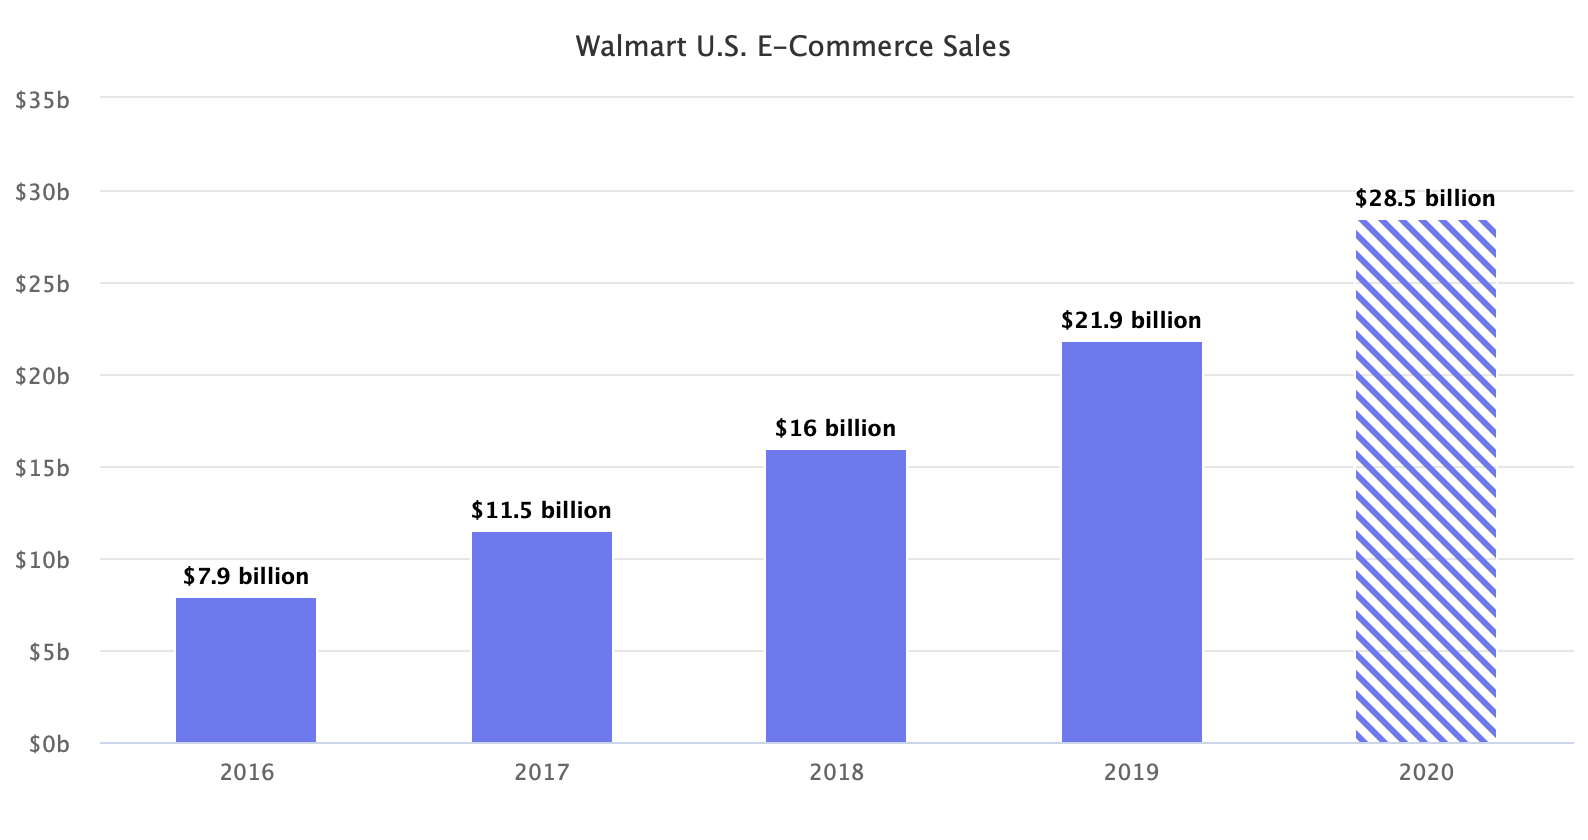 Walmart U.S. E-Commerce Sales